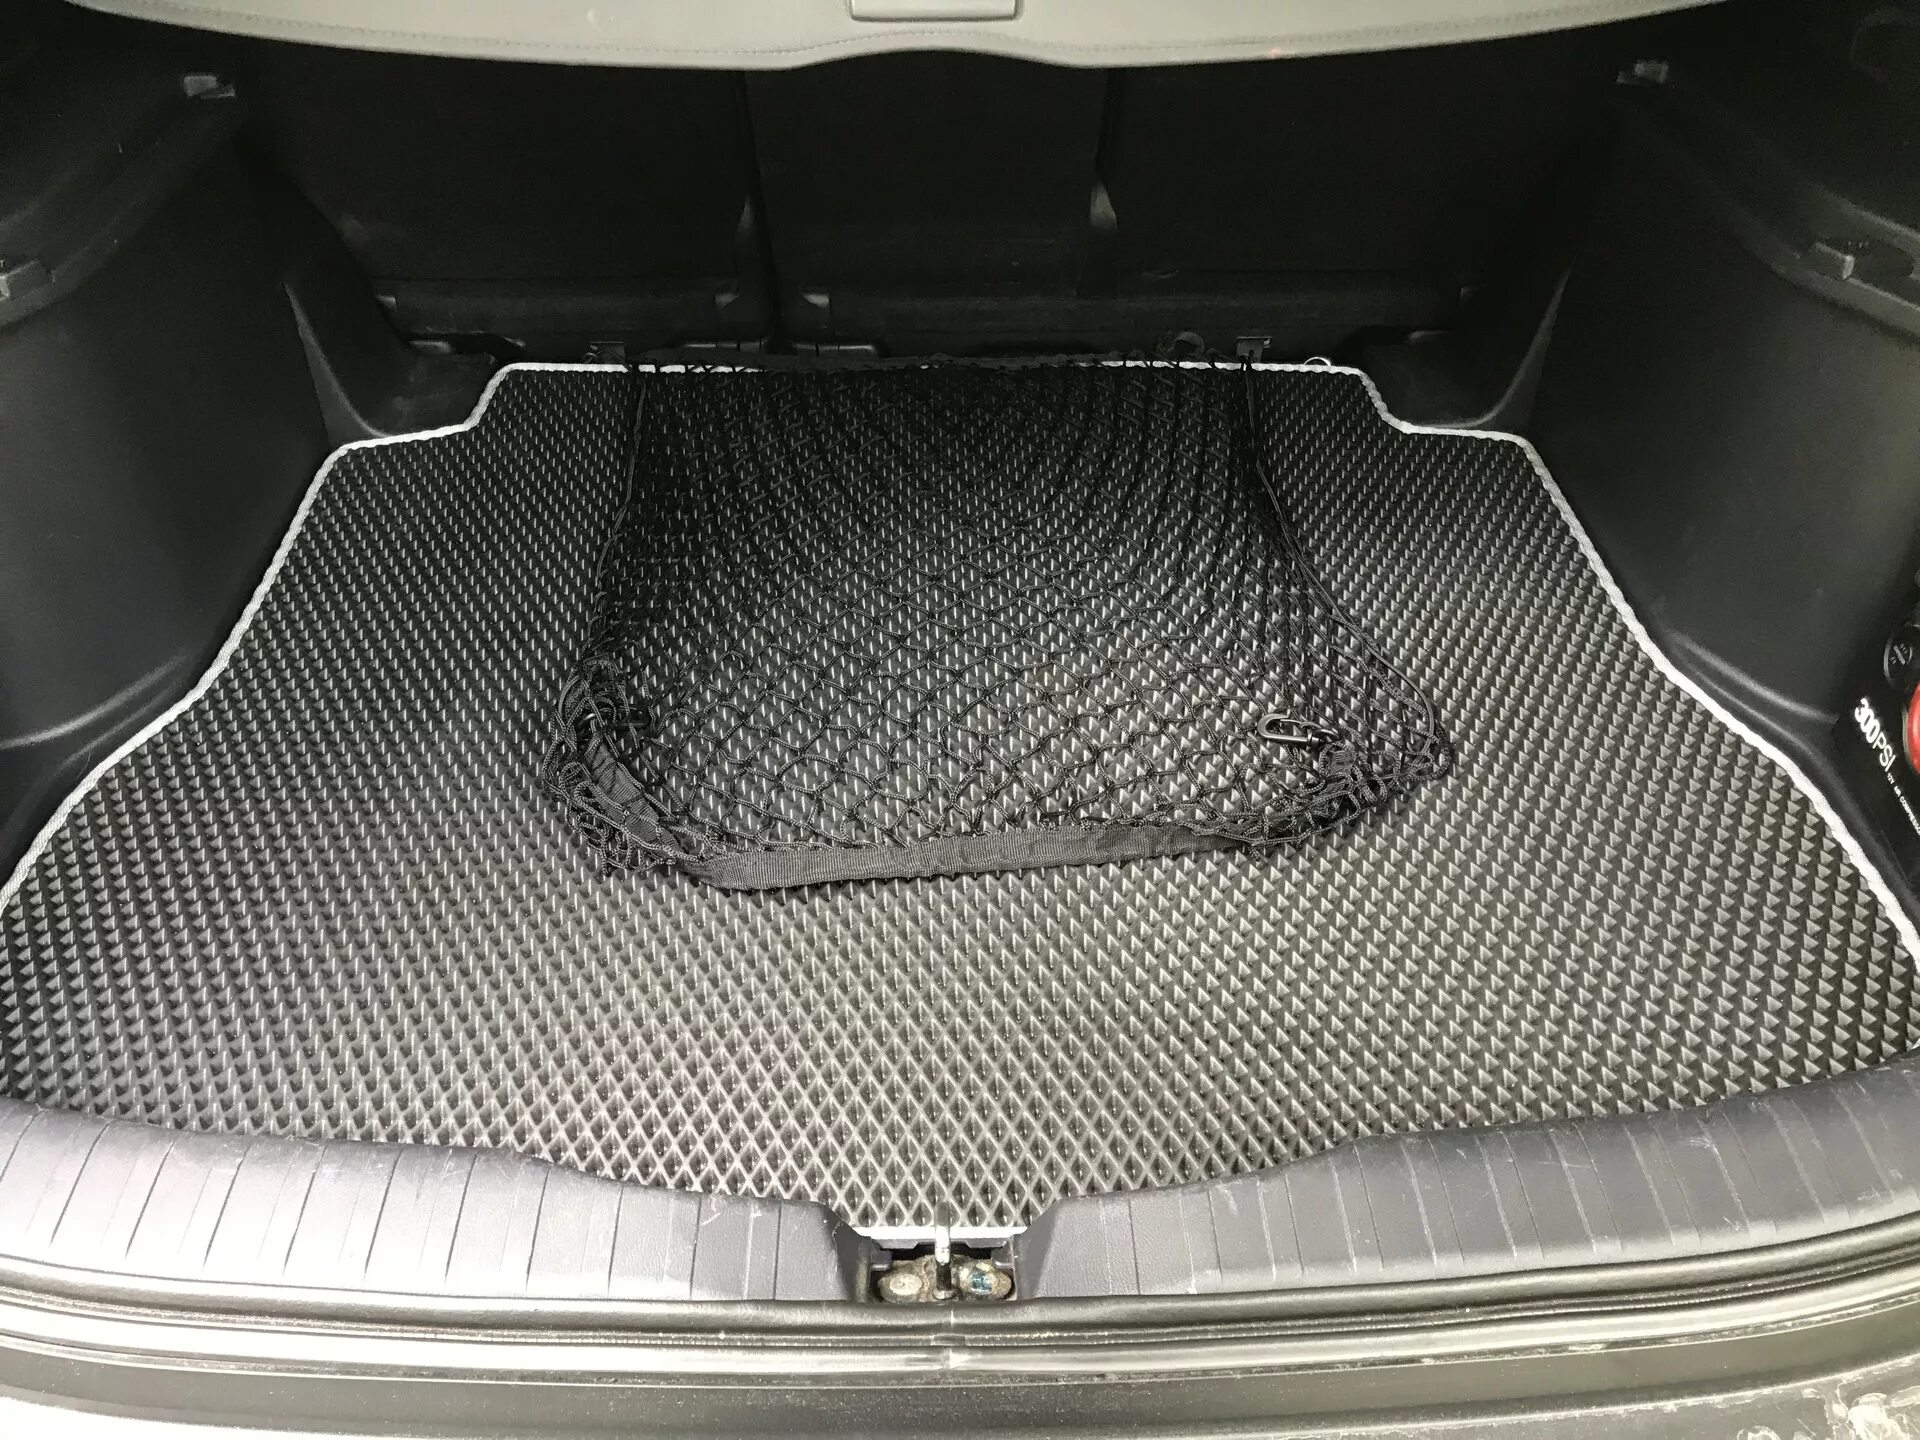 Эво коврики в багажник. ЭВА коврик в багажник Toyota 4runner. Коврик в багажник w203. Ево коврик в богажник камри50. ЭВА коврик в багажник Камри 50.